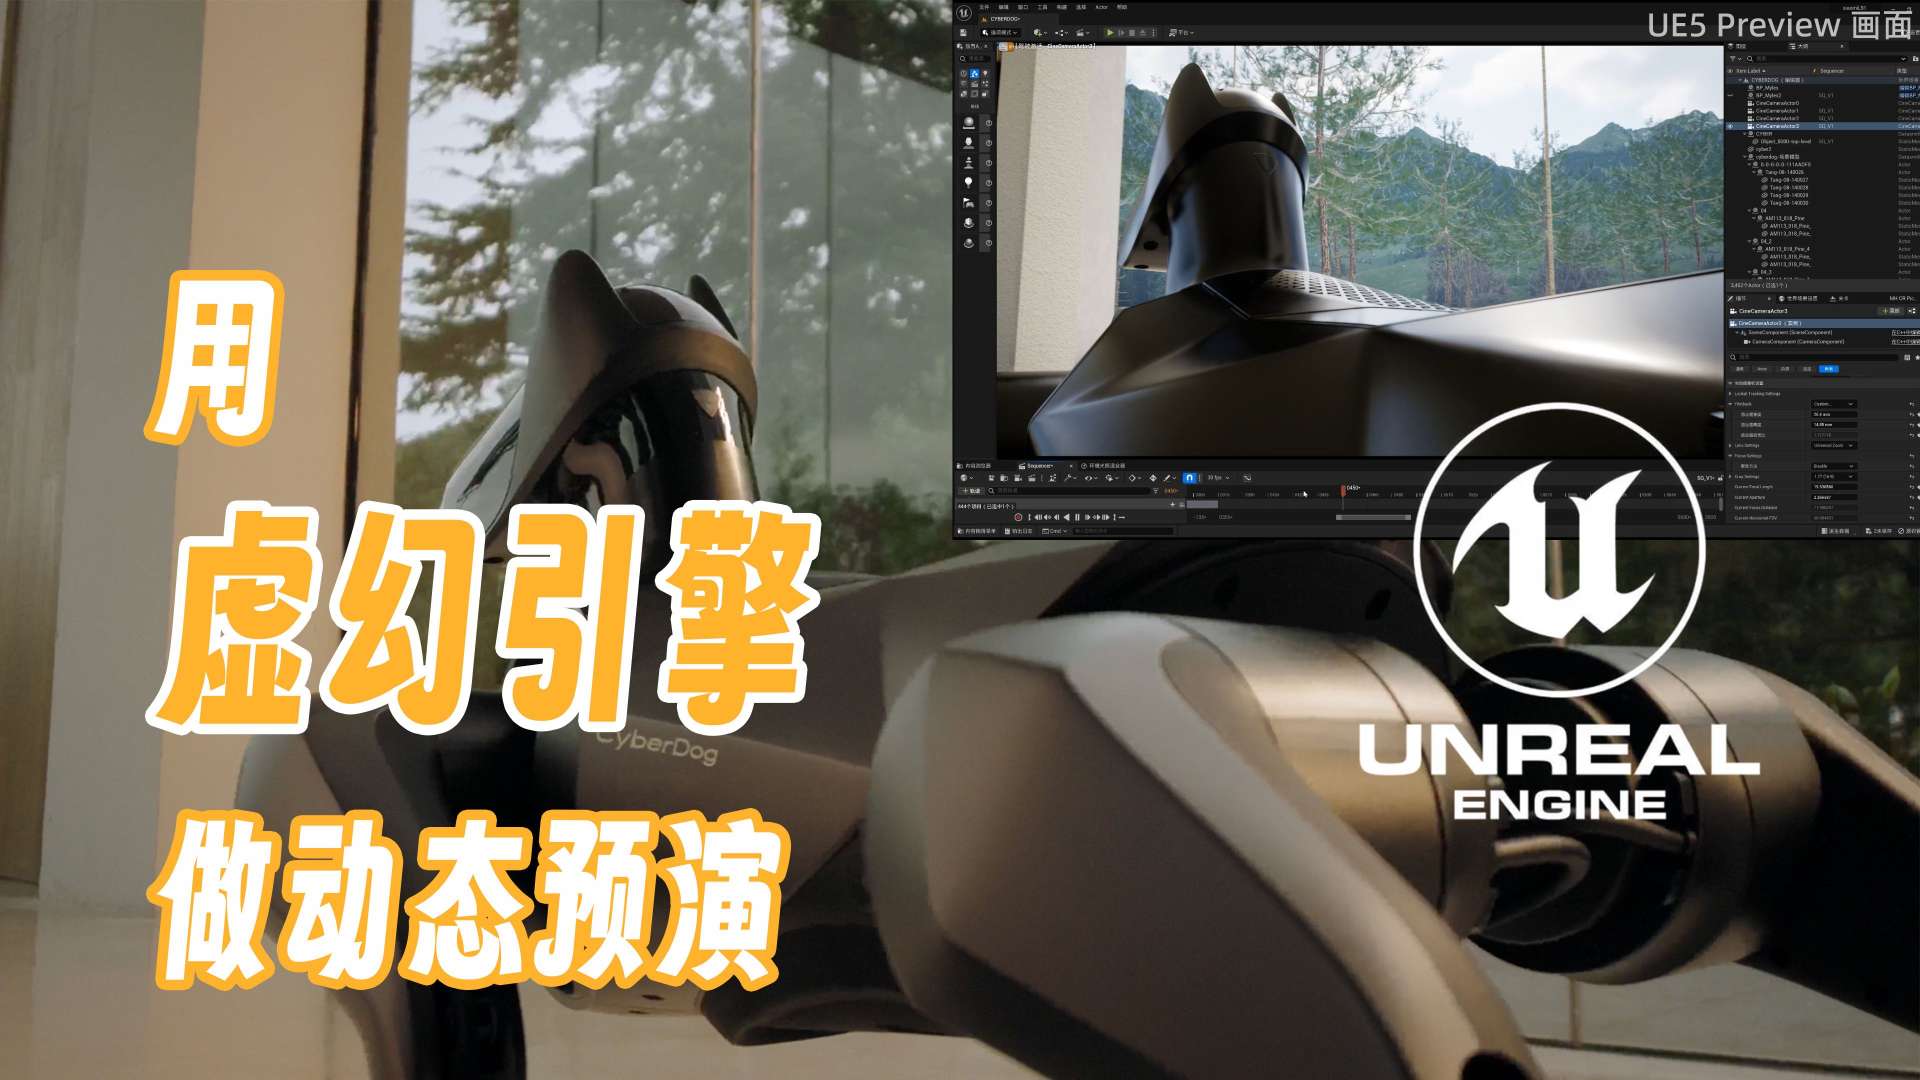 UE5 Preview 动态预演 《Cyber Dog2》成片对比